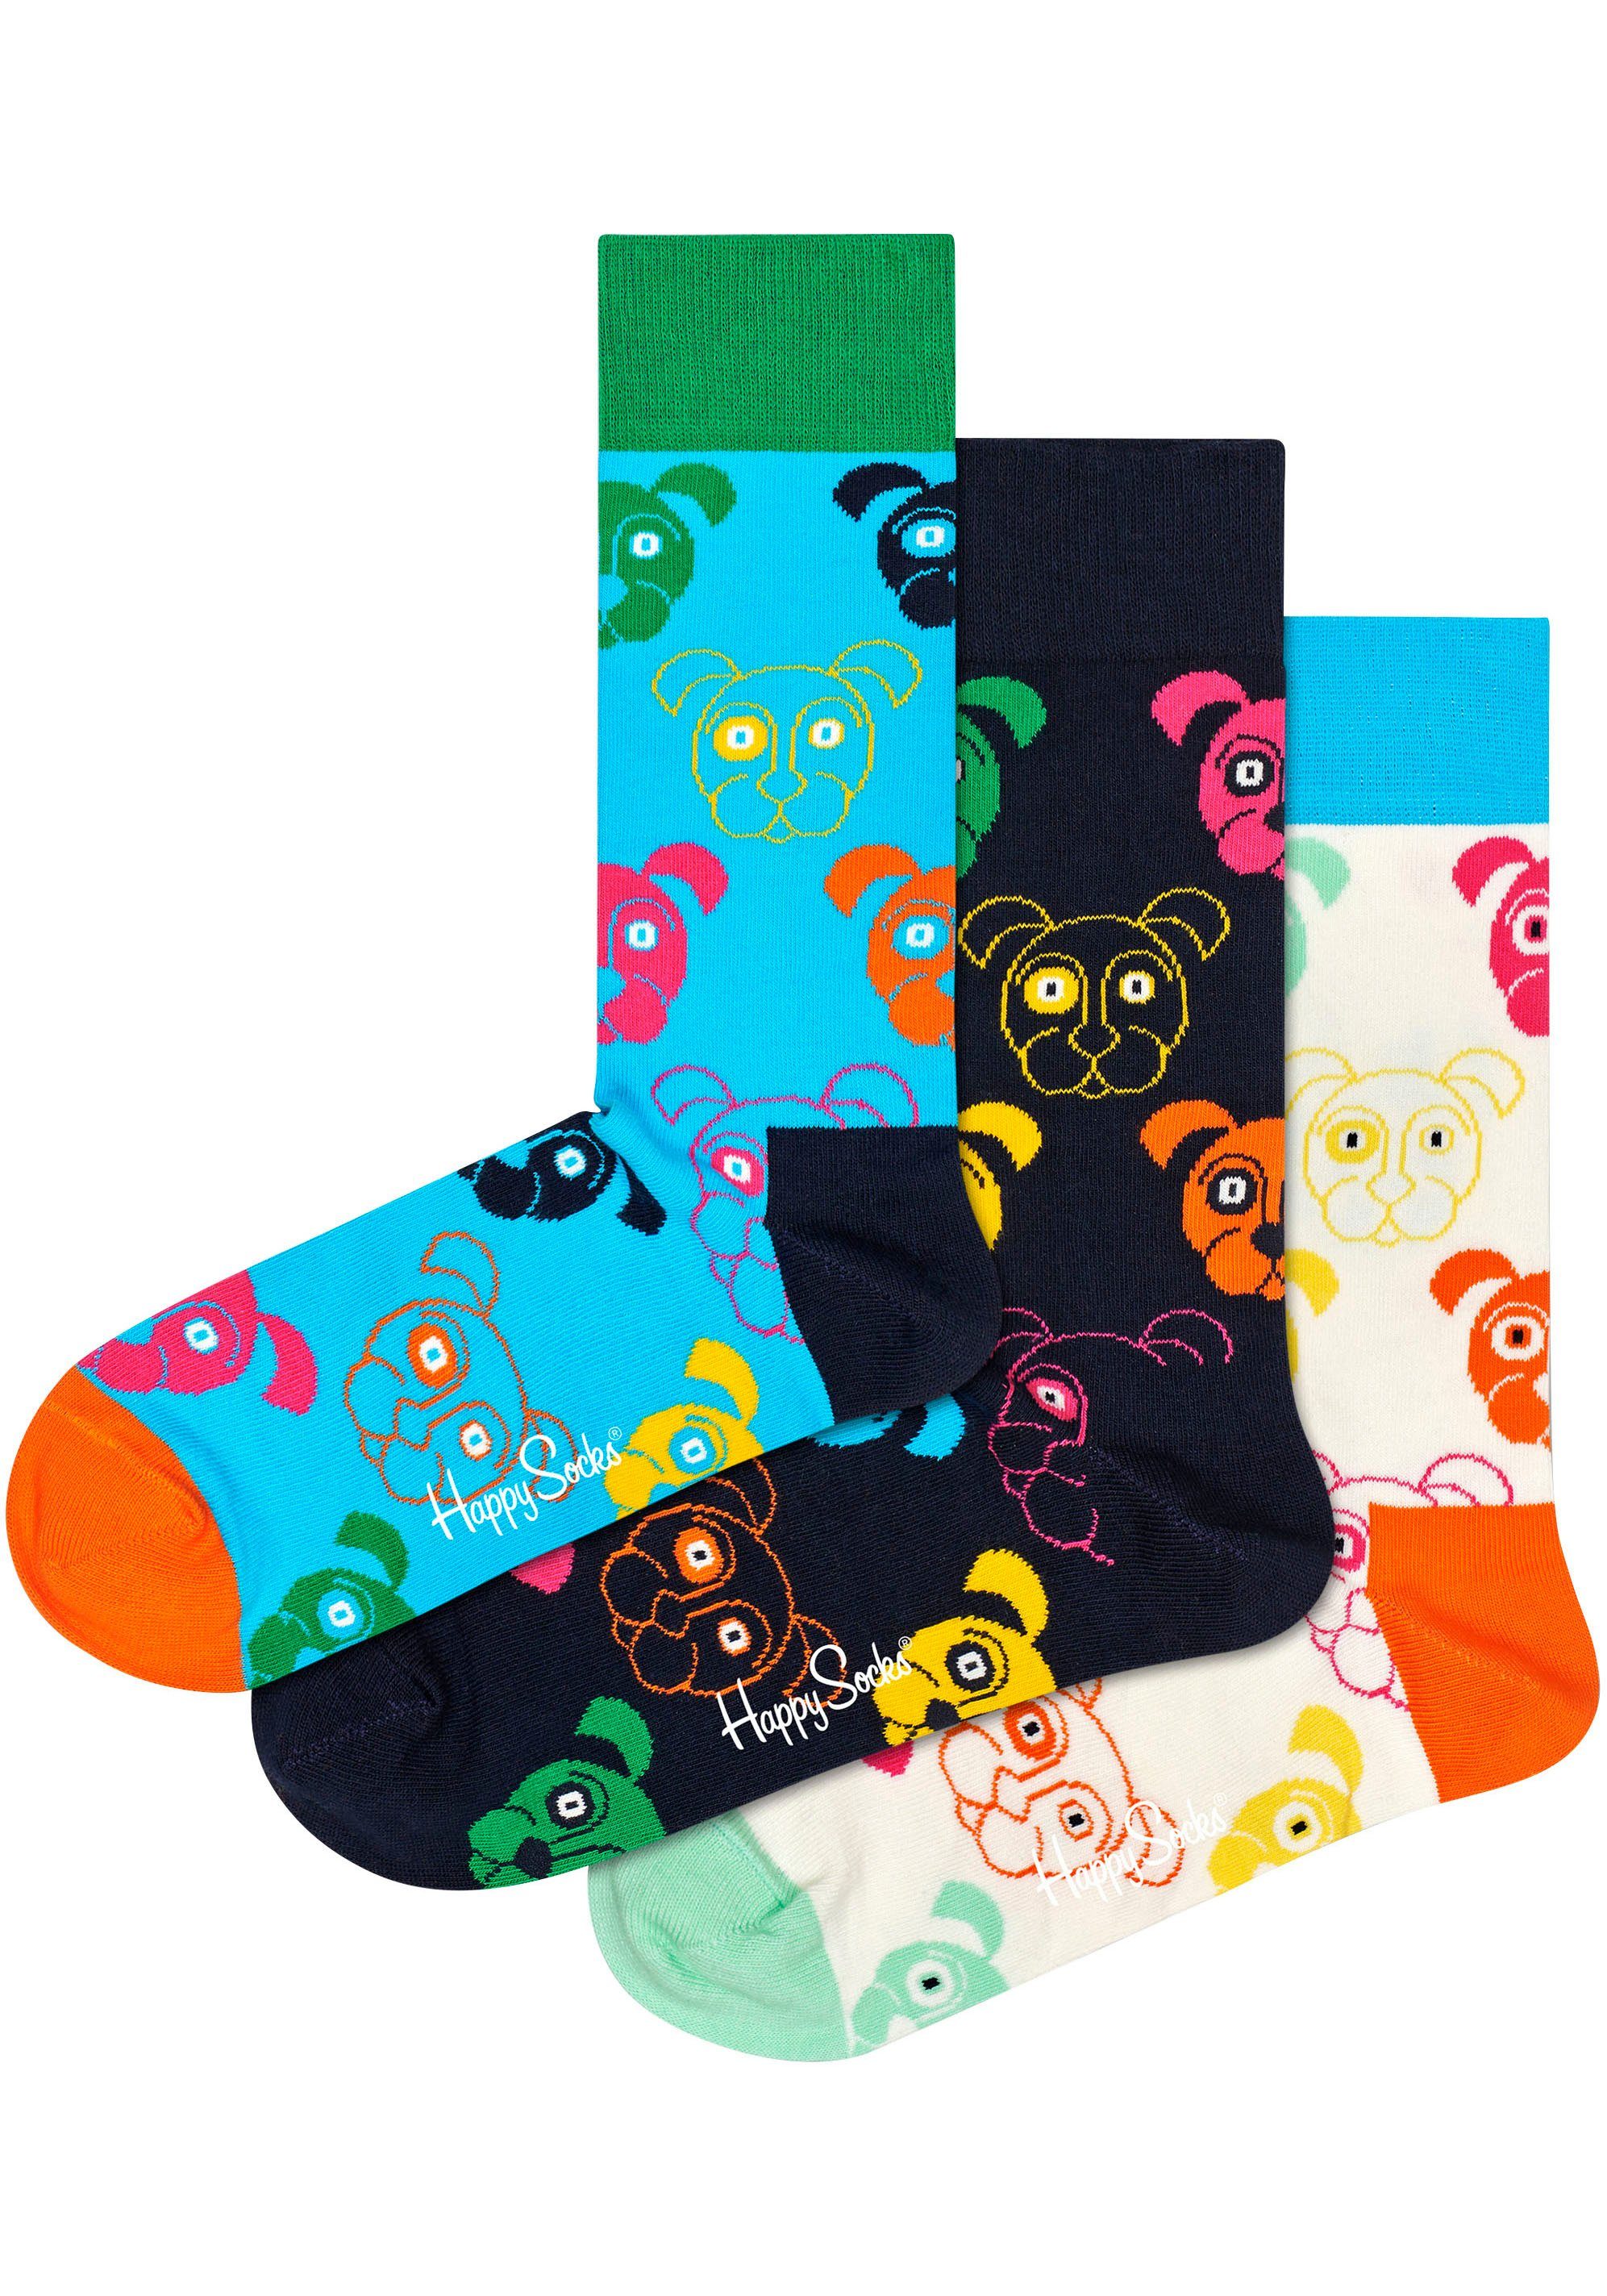 Happy Socks Socken 3-Pack Socks (Packung) Gift Set Mixed Dog Dog 2 Mixed Hunde-Motiv